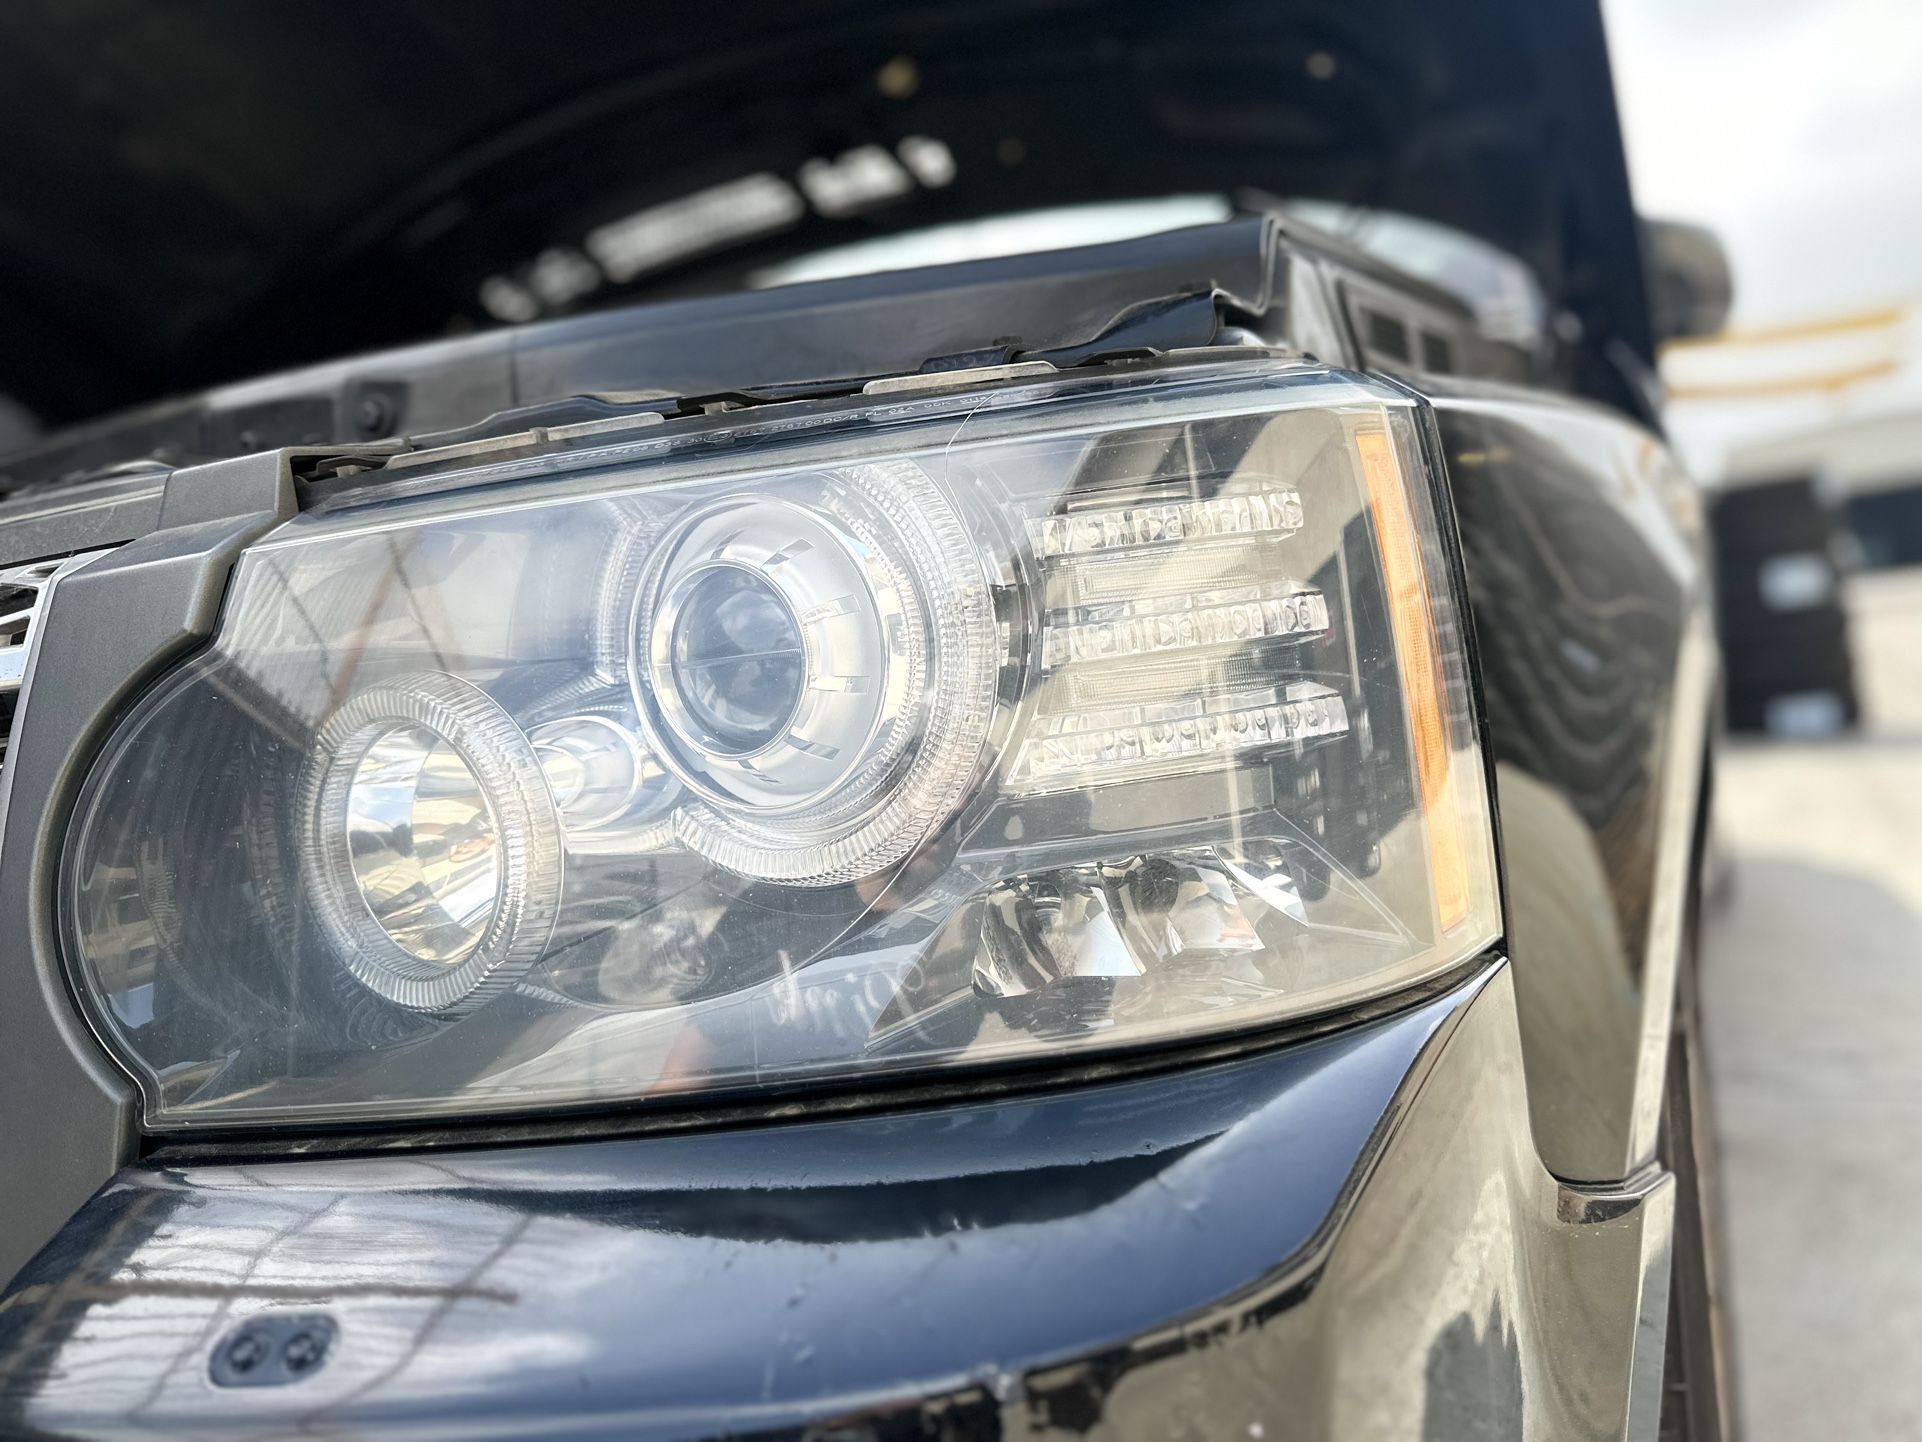 2010 Range Rover Left & Right Front Head Lights 